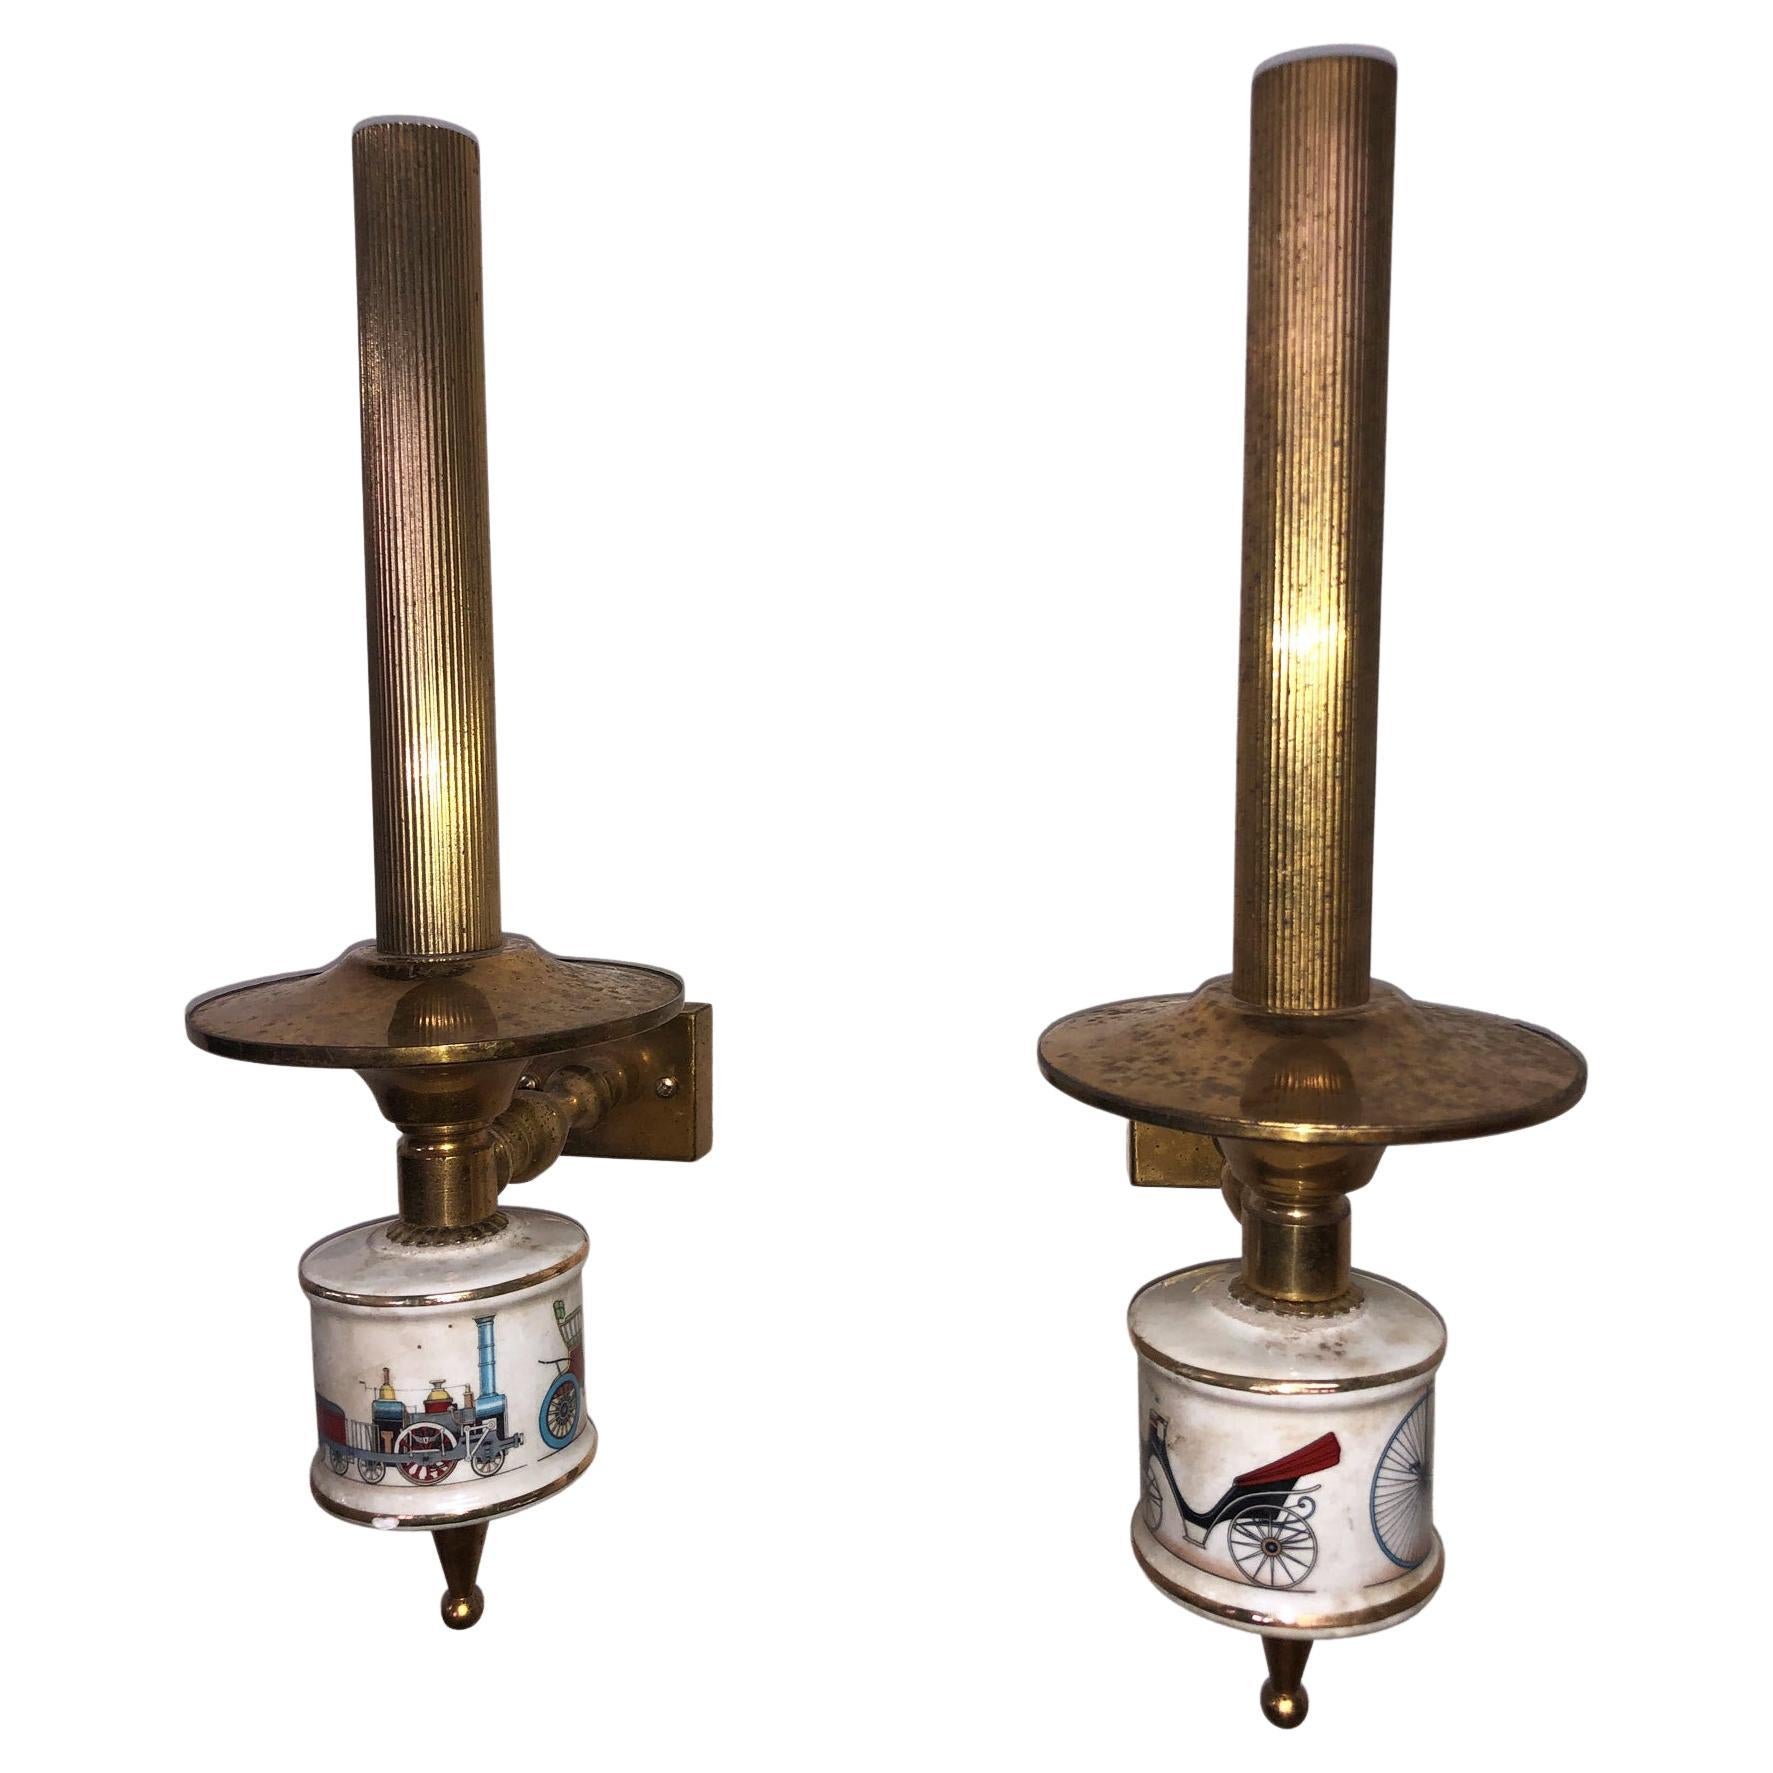 Pair of Original Italian Wall Lights Sconces Brass and Porcelain Design